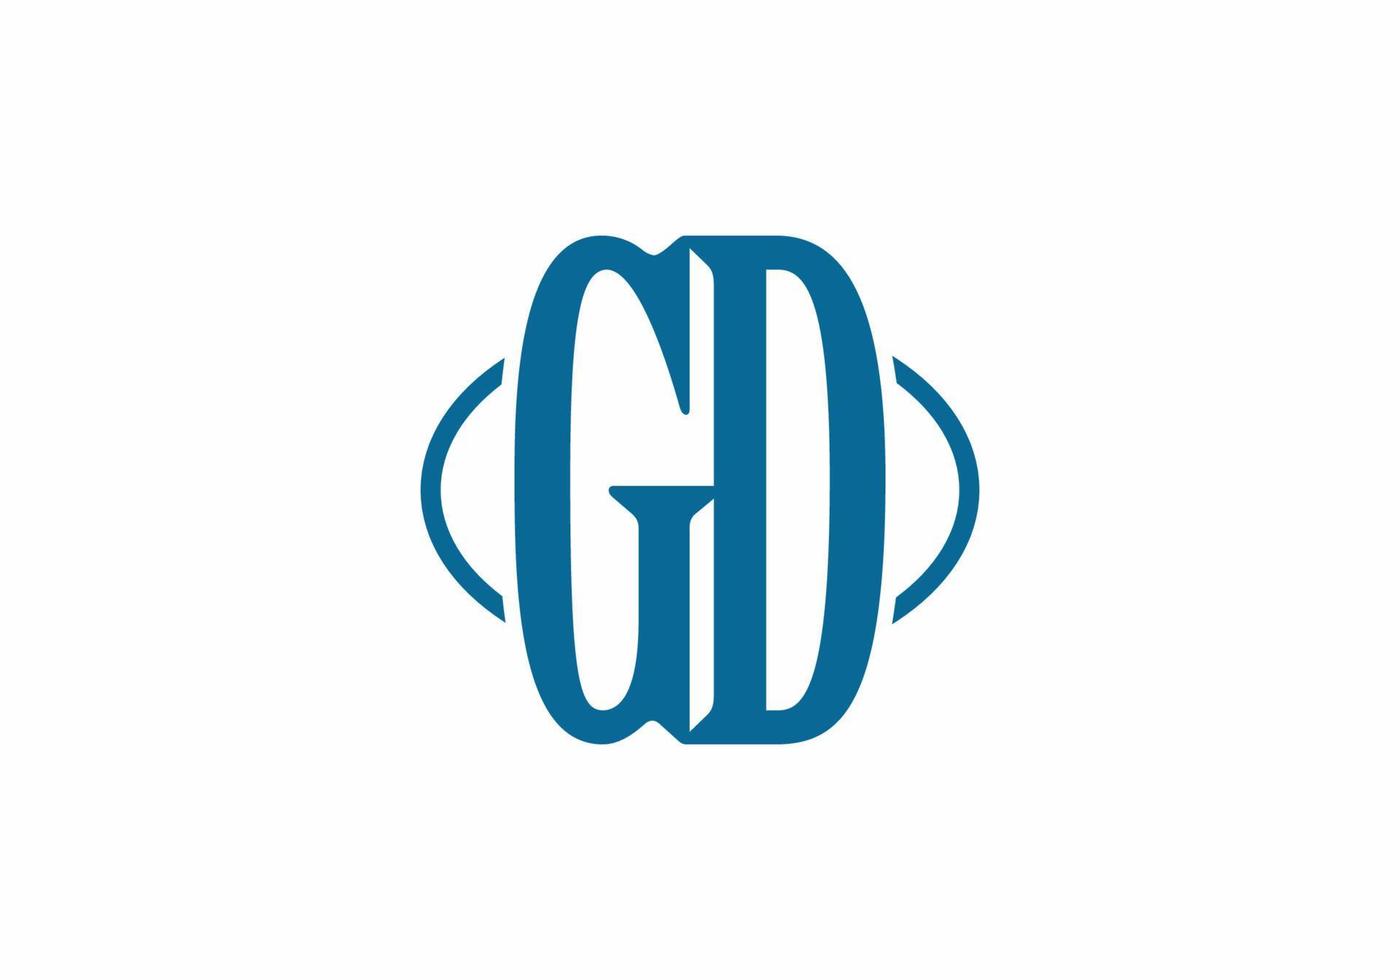 Blue GD initial letter logo vector